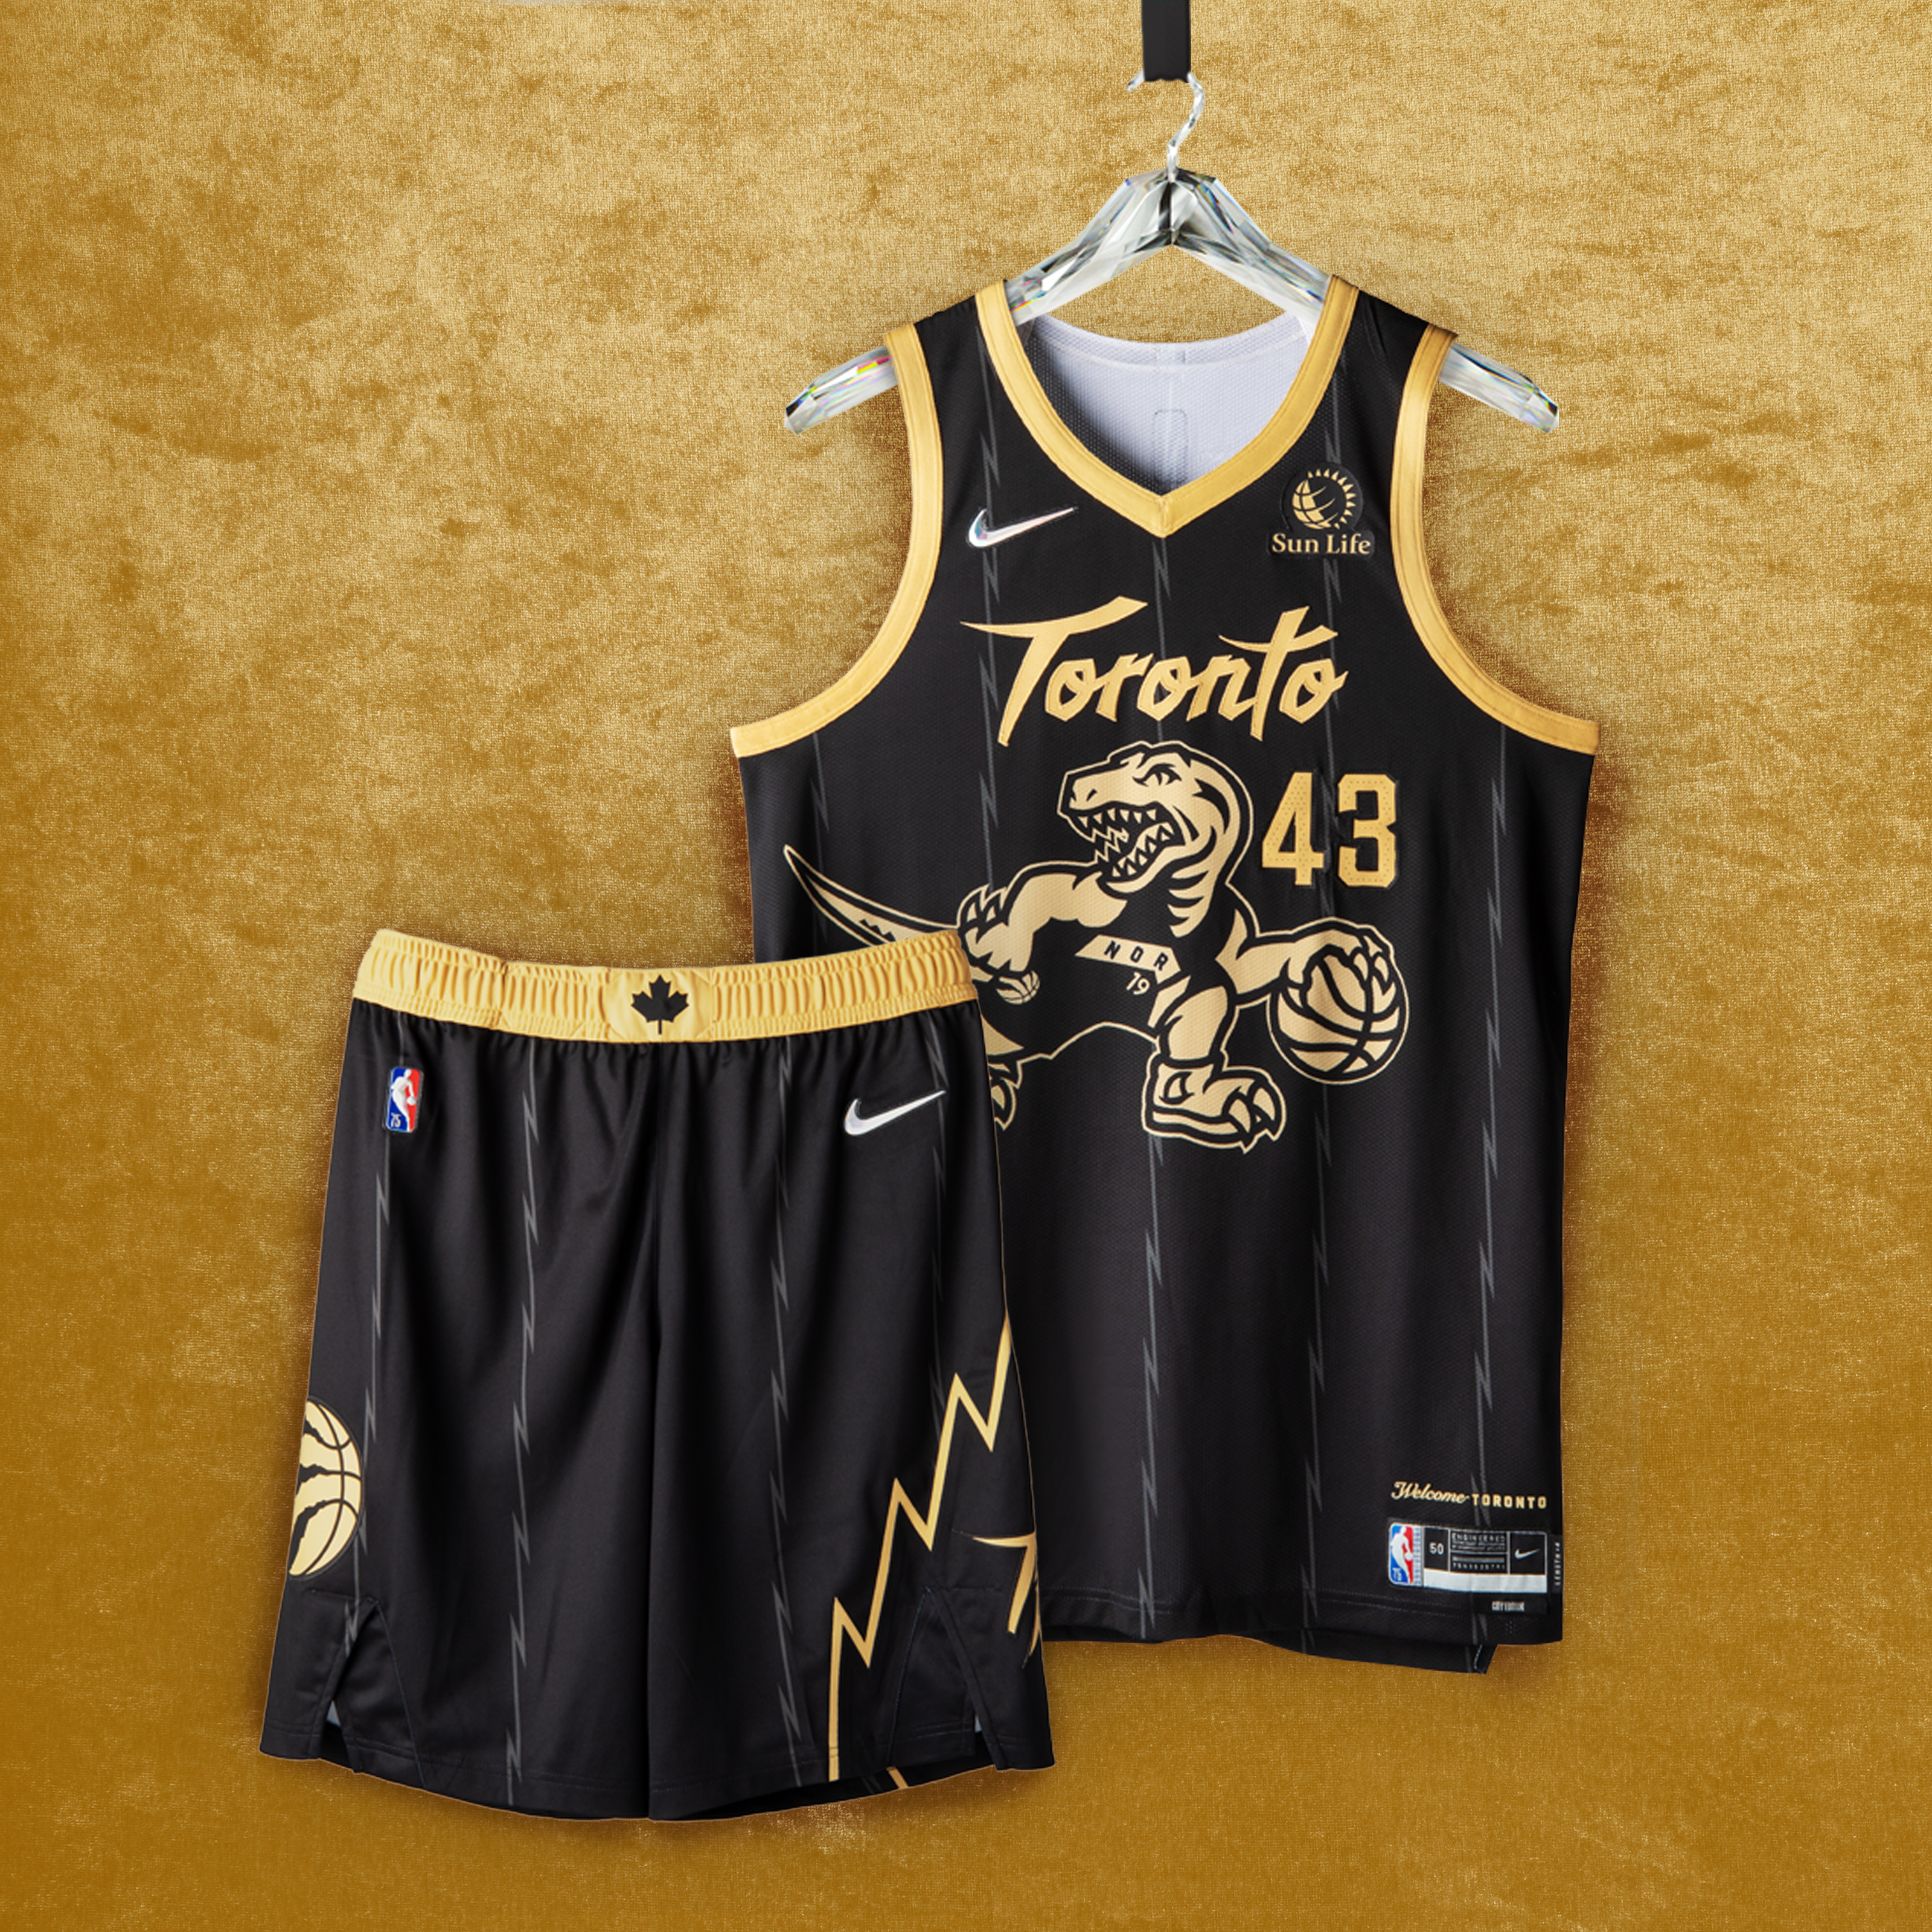 Toronto Raptors 22/23 City Edition Uniform: Welcome to Toronto